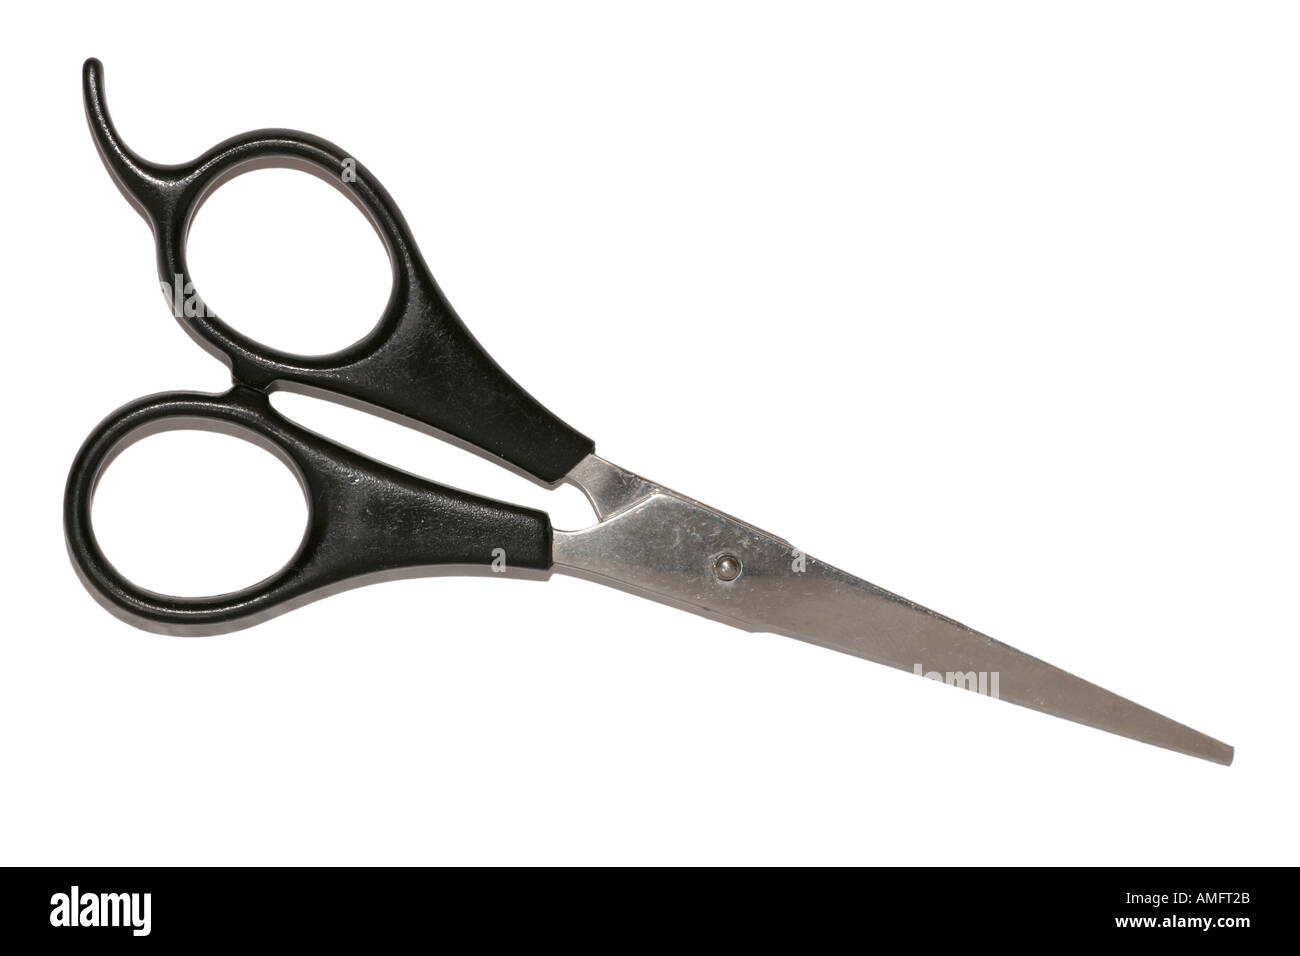 A Hairdressers Scissors Stock Photo 4979754 Alamy